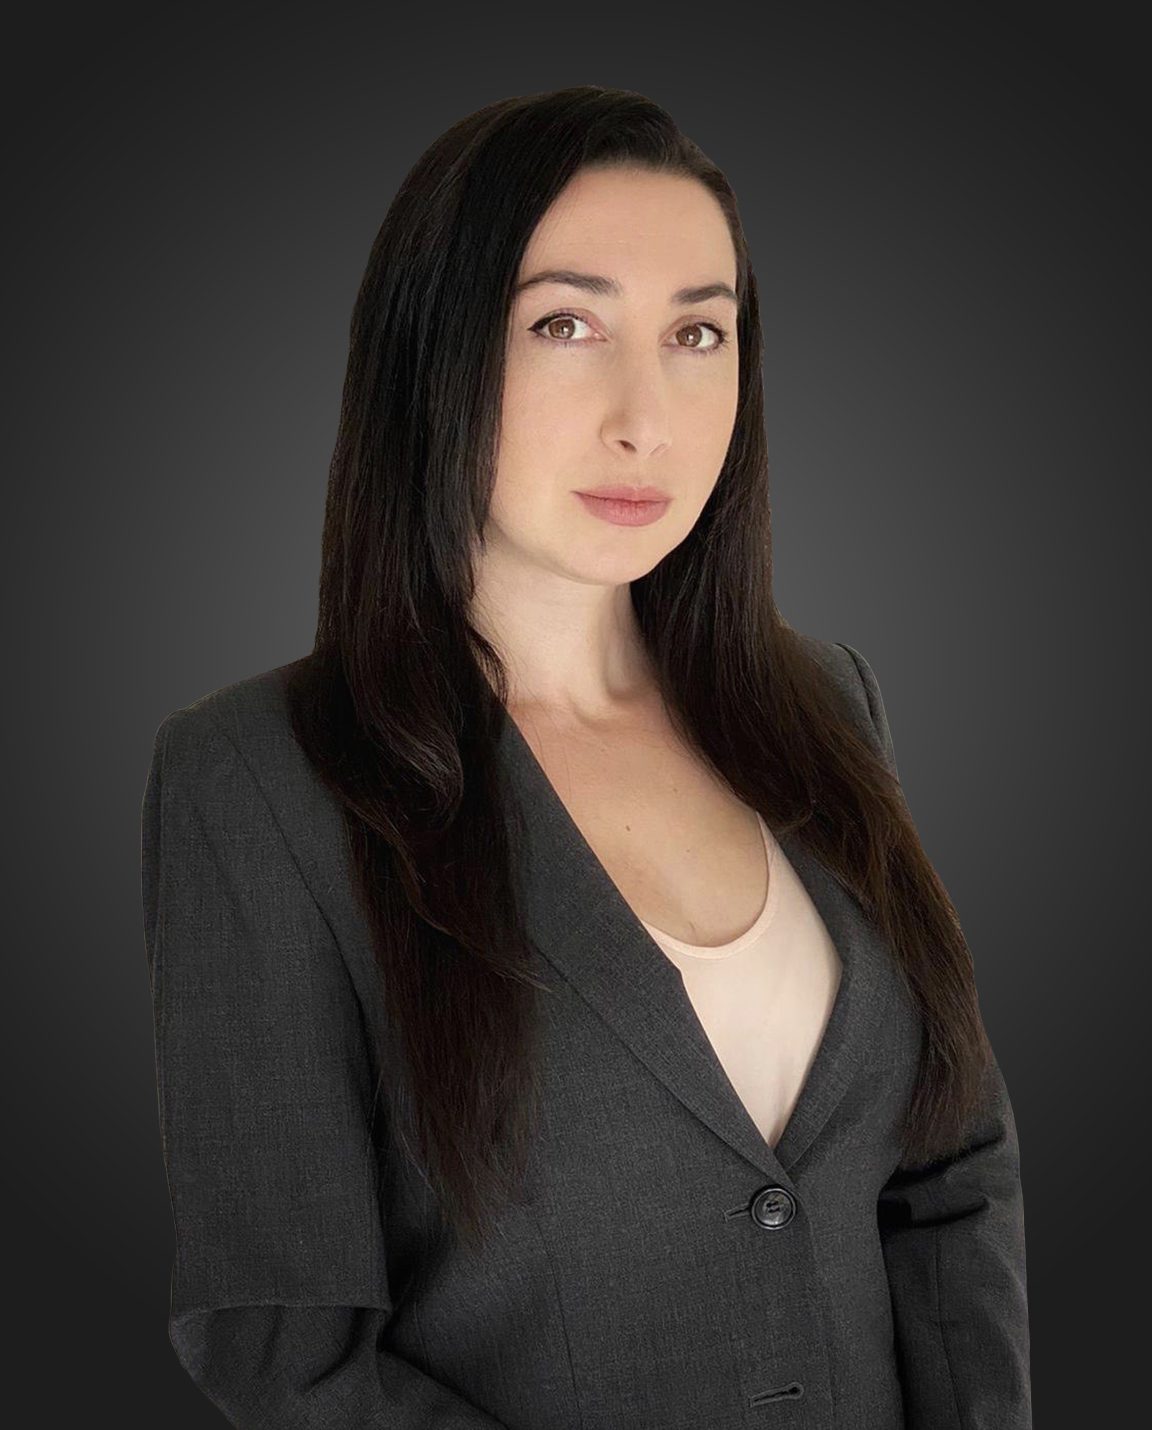 Virginia Ksadzhikyan from B|B Law